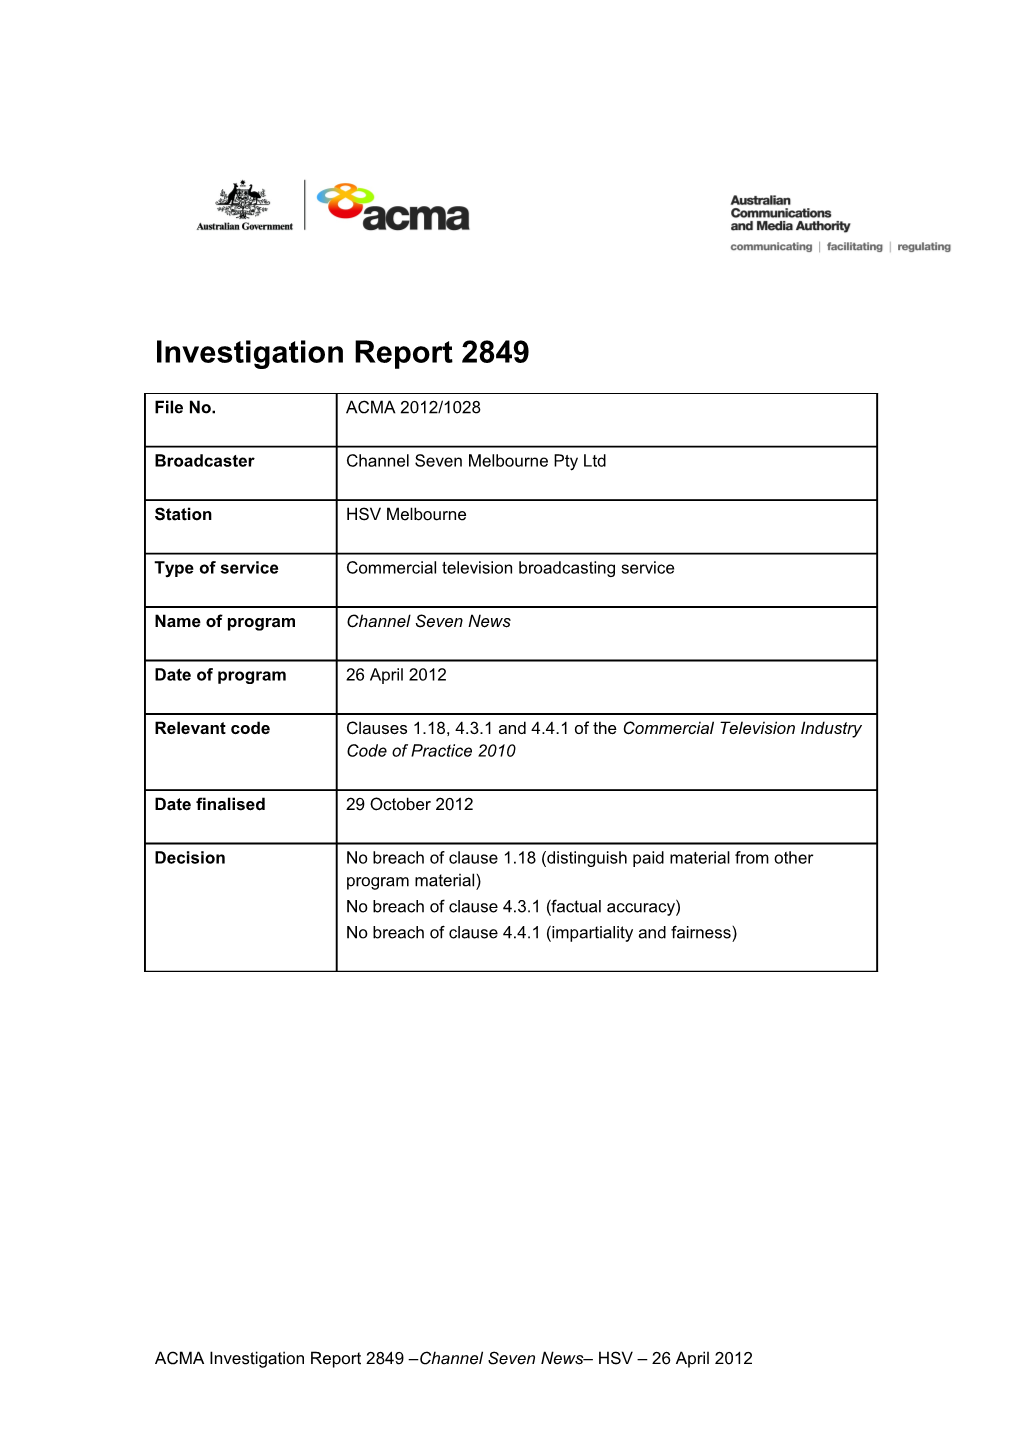 HSV7 Melbourne - ACMA Investigation Report 2849